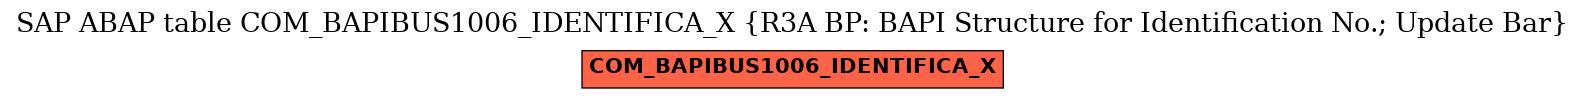 E-R Diagram for table COM_BAPIBUS1006_IDENTIFICA_X (R3A BP: BAPI Structure for Identification No.; Update Bar)